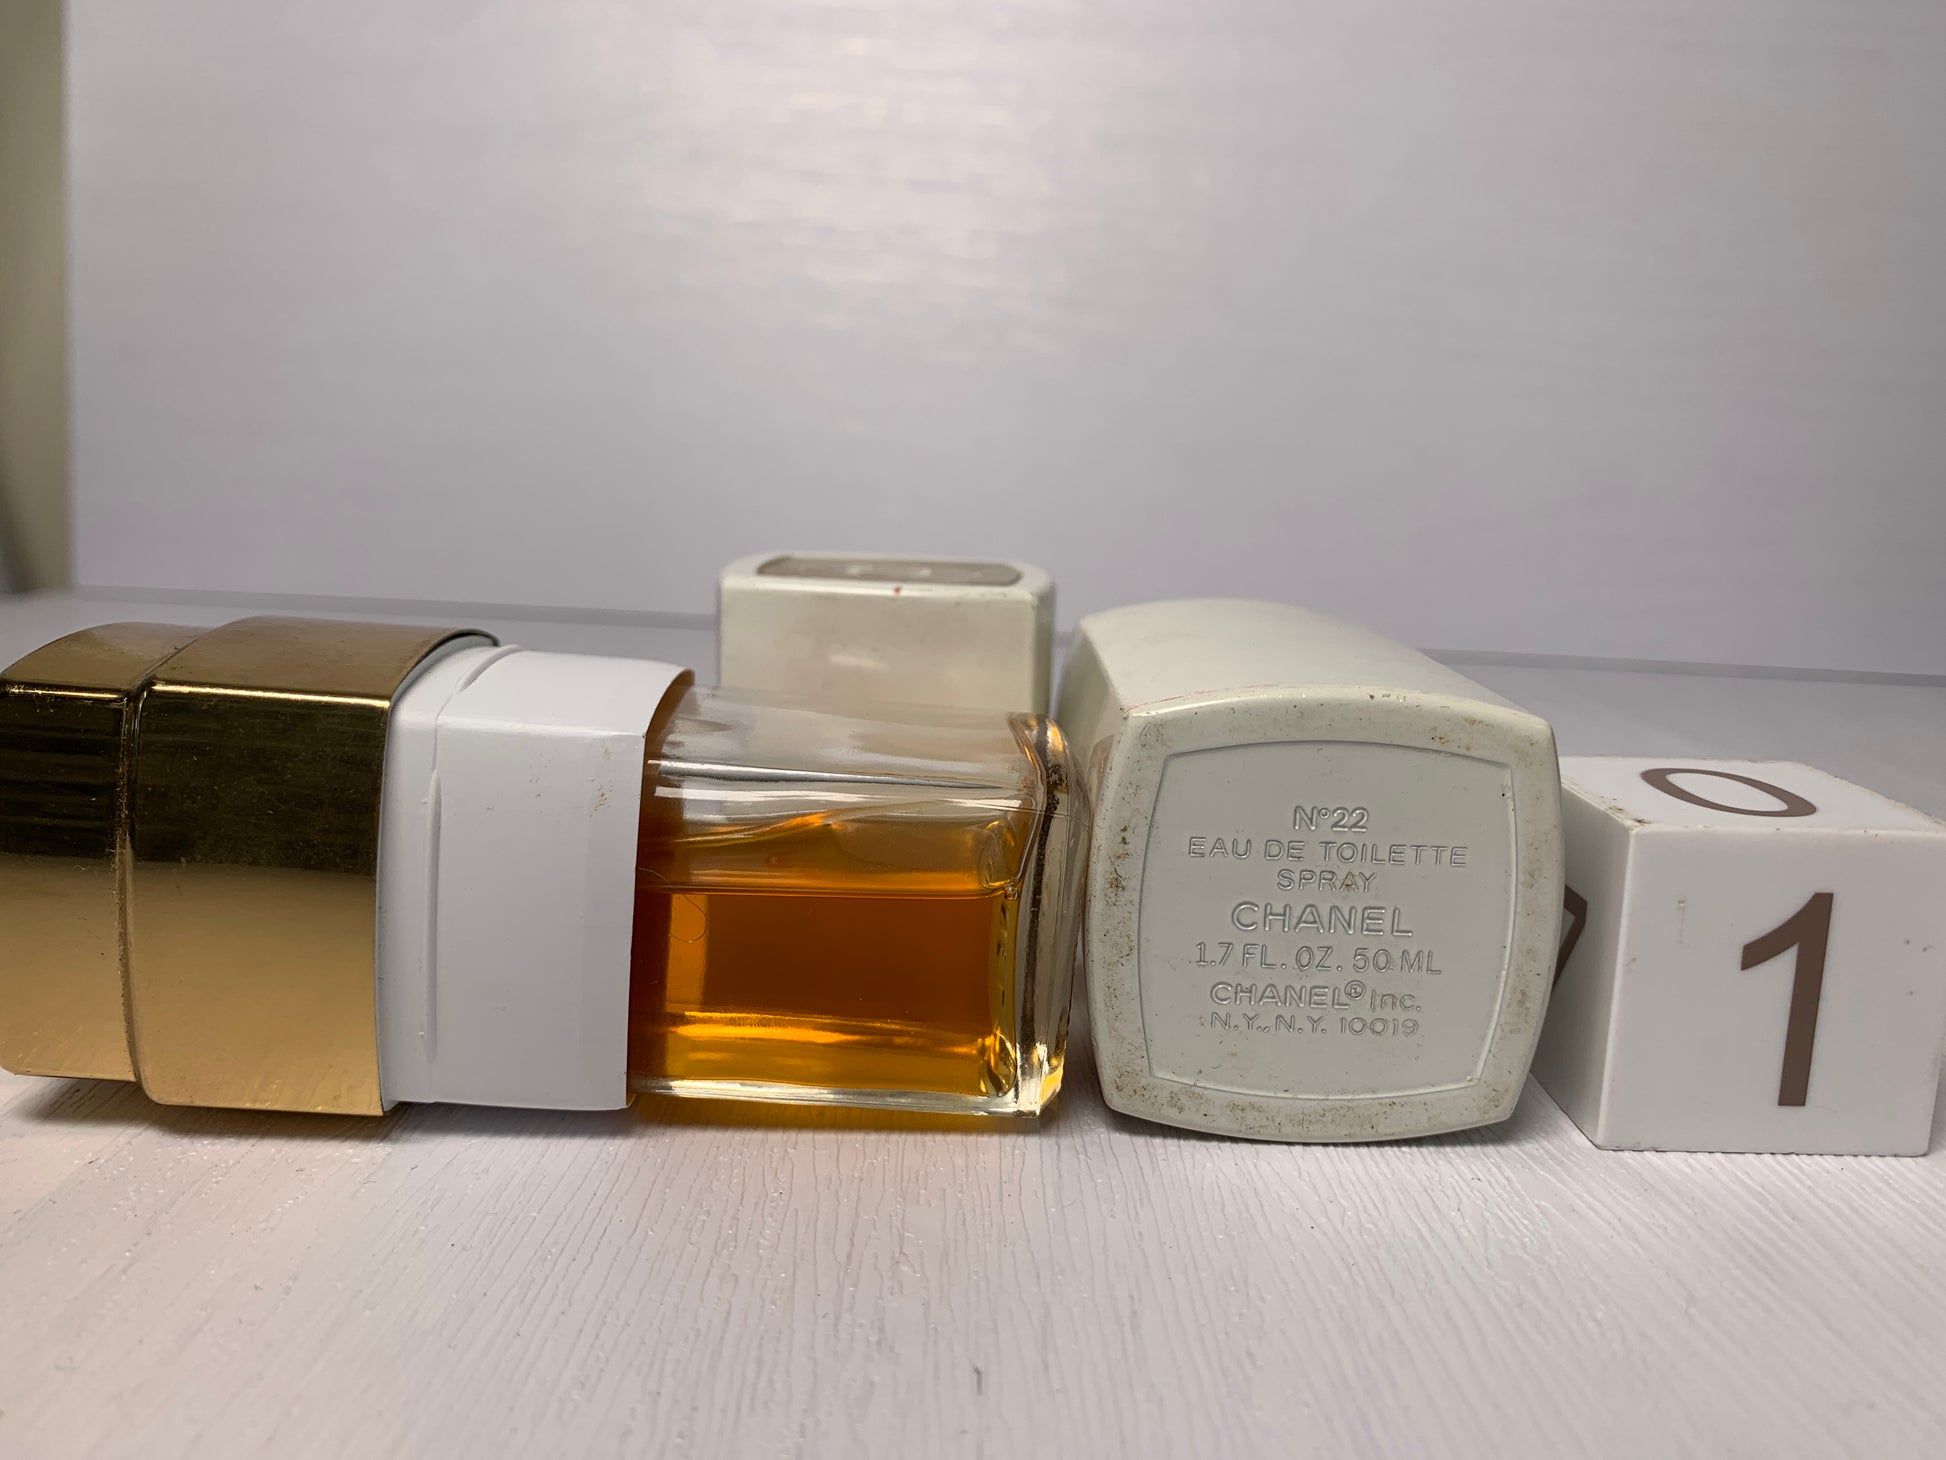 Vtg Cristalle By Chanel Perfume Women 1.7 oz / 50 ml Eau De Parfum Spray  Empty